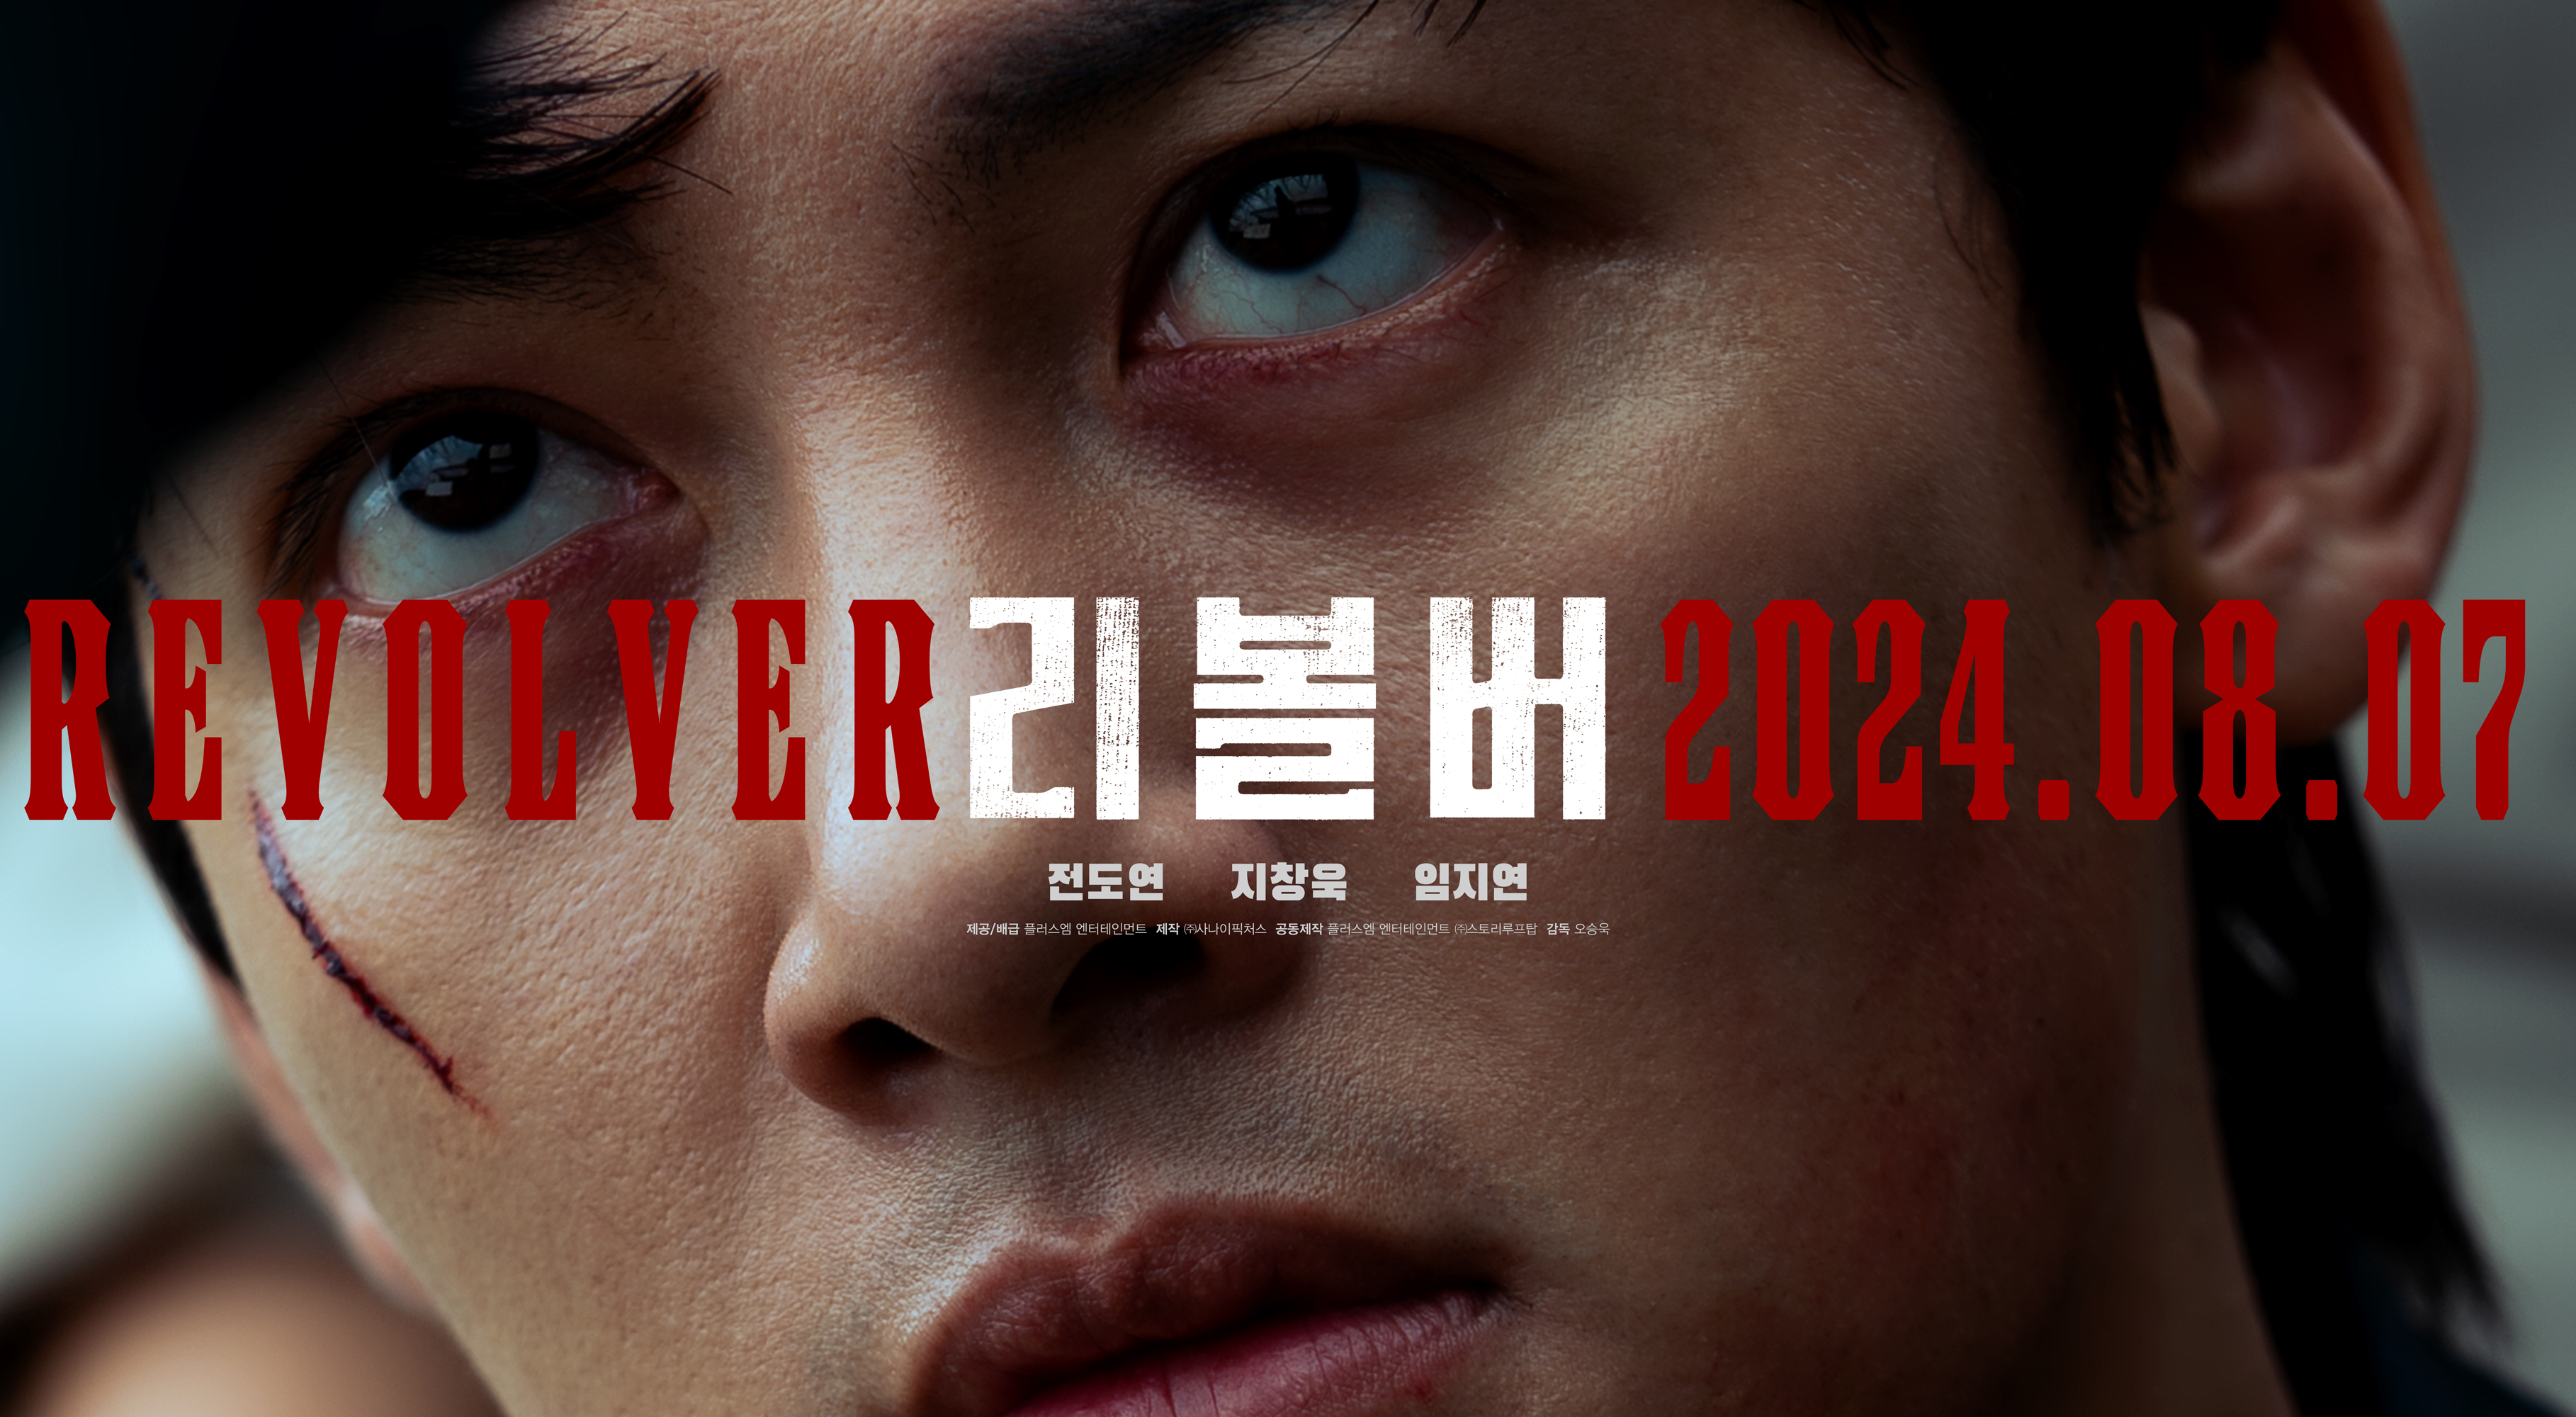 Watch: Jeon Do Yeon Vigorously Pursues Ji Chang Wook Amid Betrayal In Riveting Teaser For New Movie 